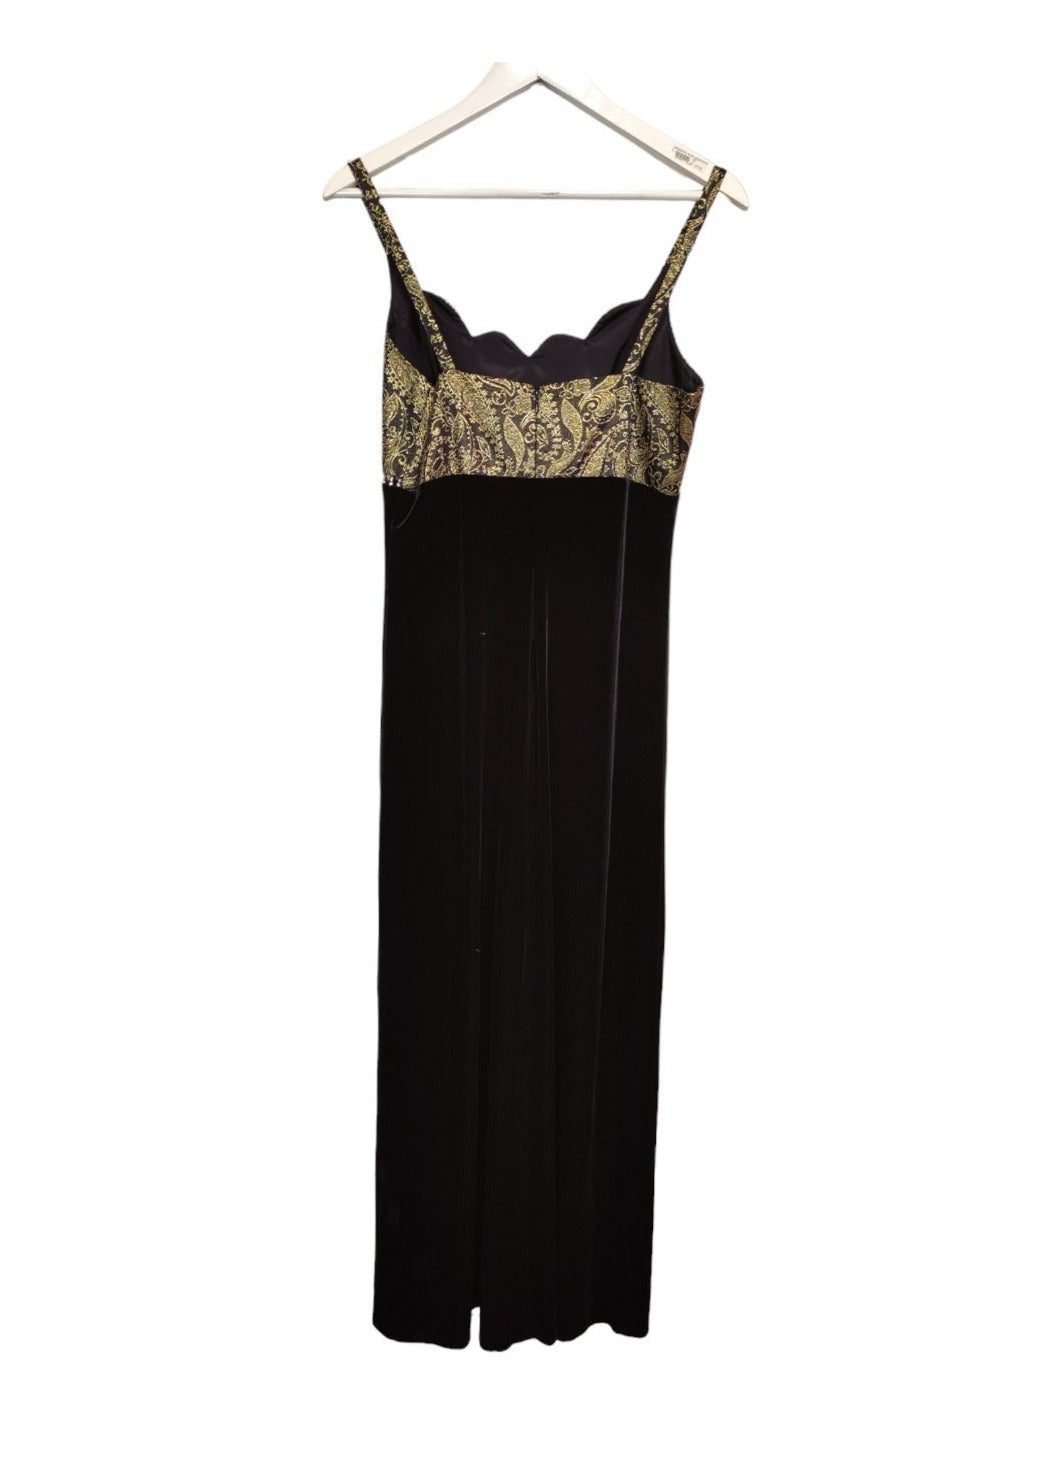 Vintage, Maxi, Βελουτέ Βραδινό Φόρεμα σε Μαύρο-Χρυσό Χρώμα (Medium)